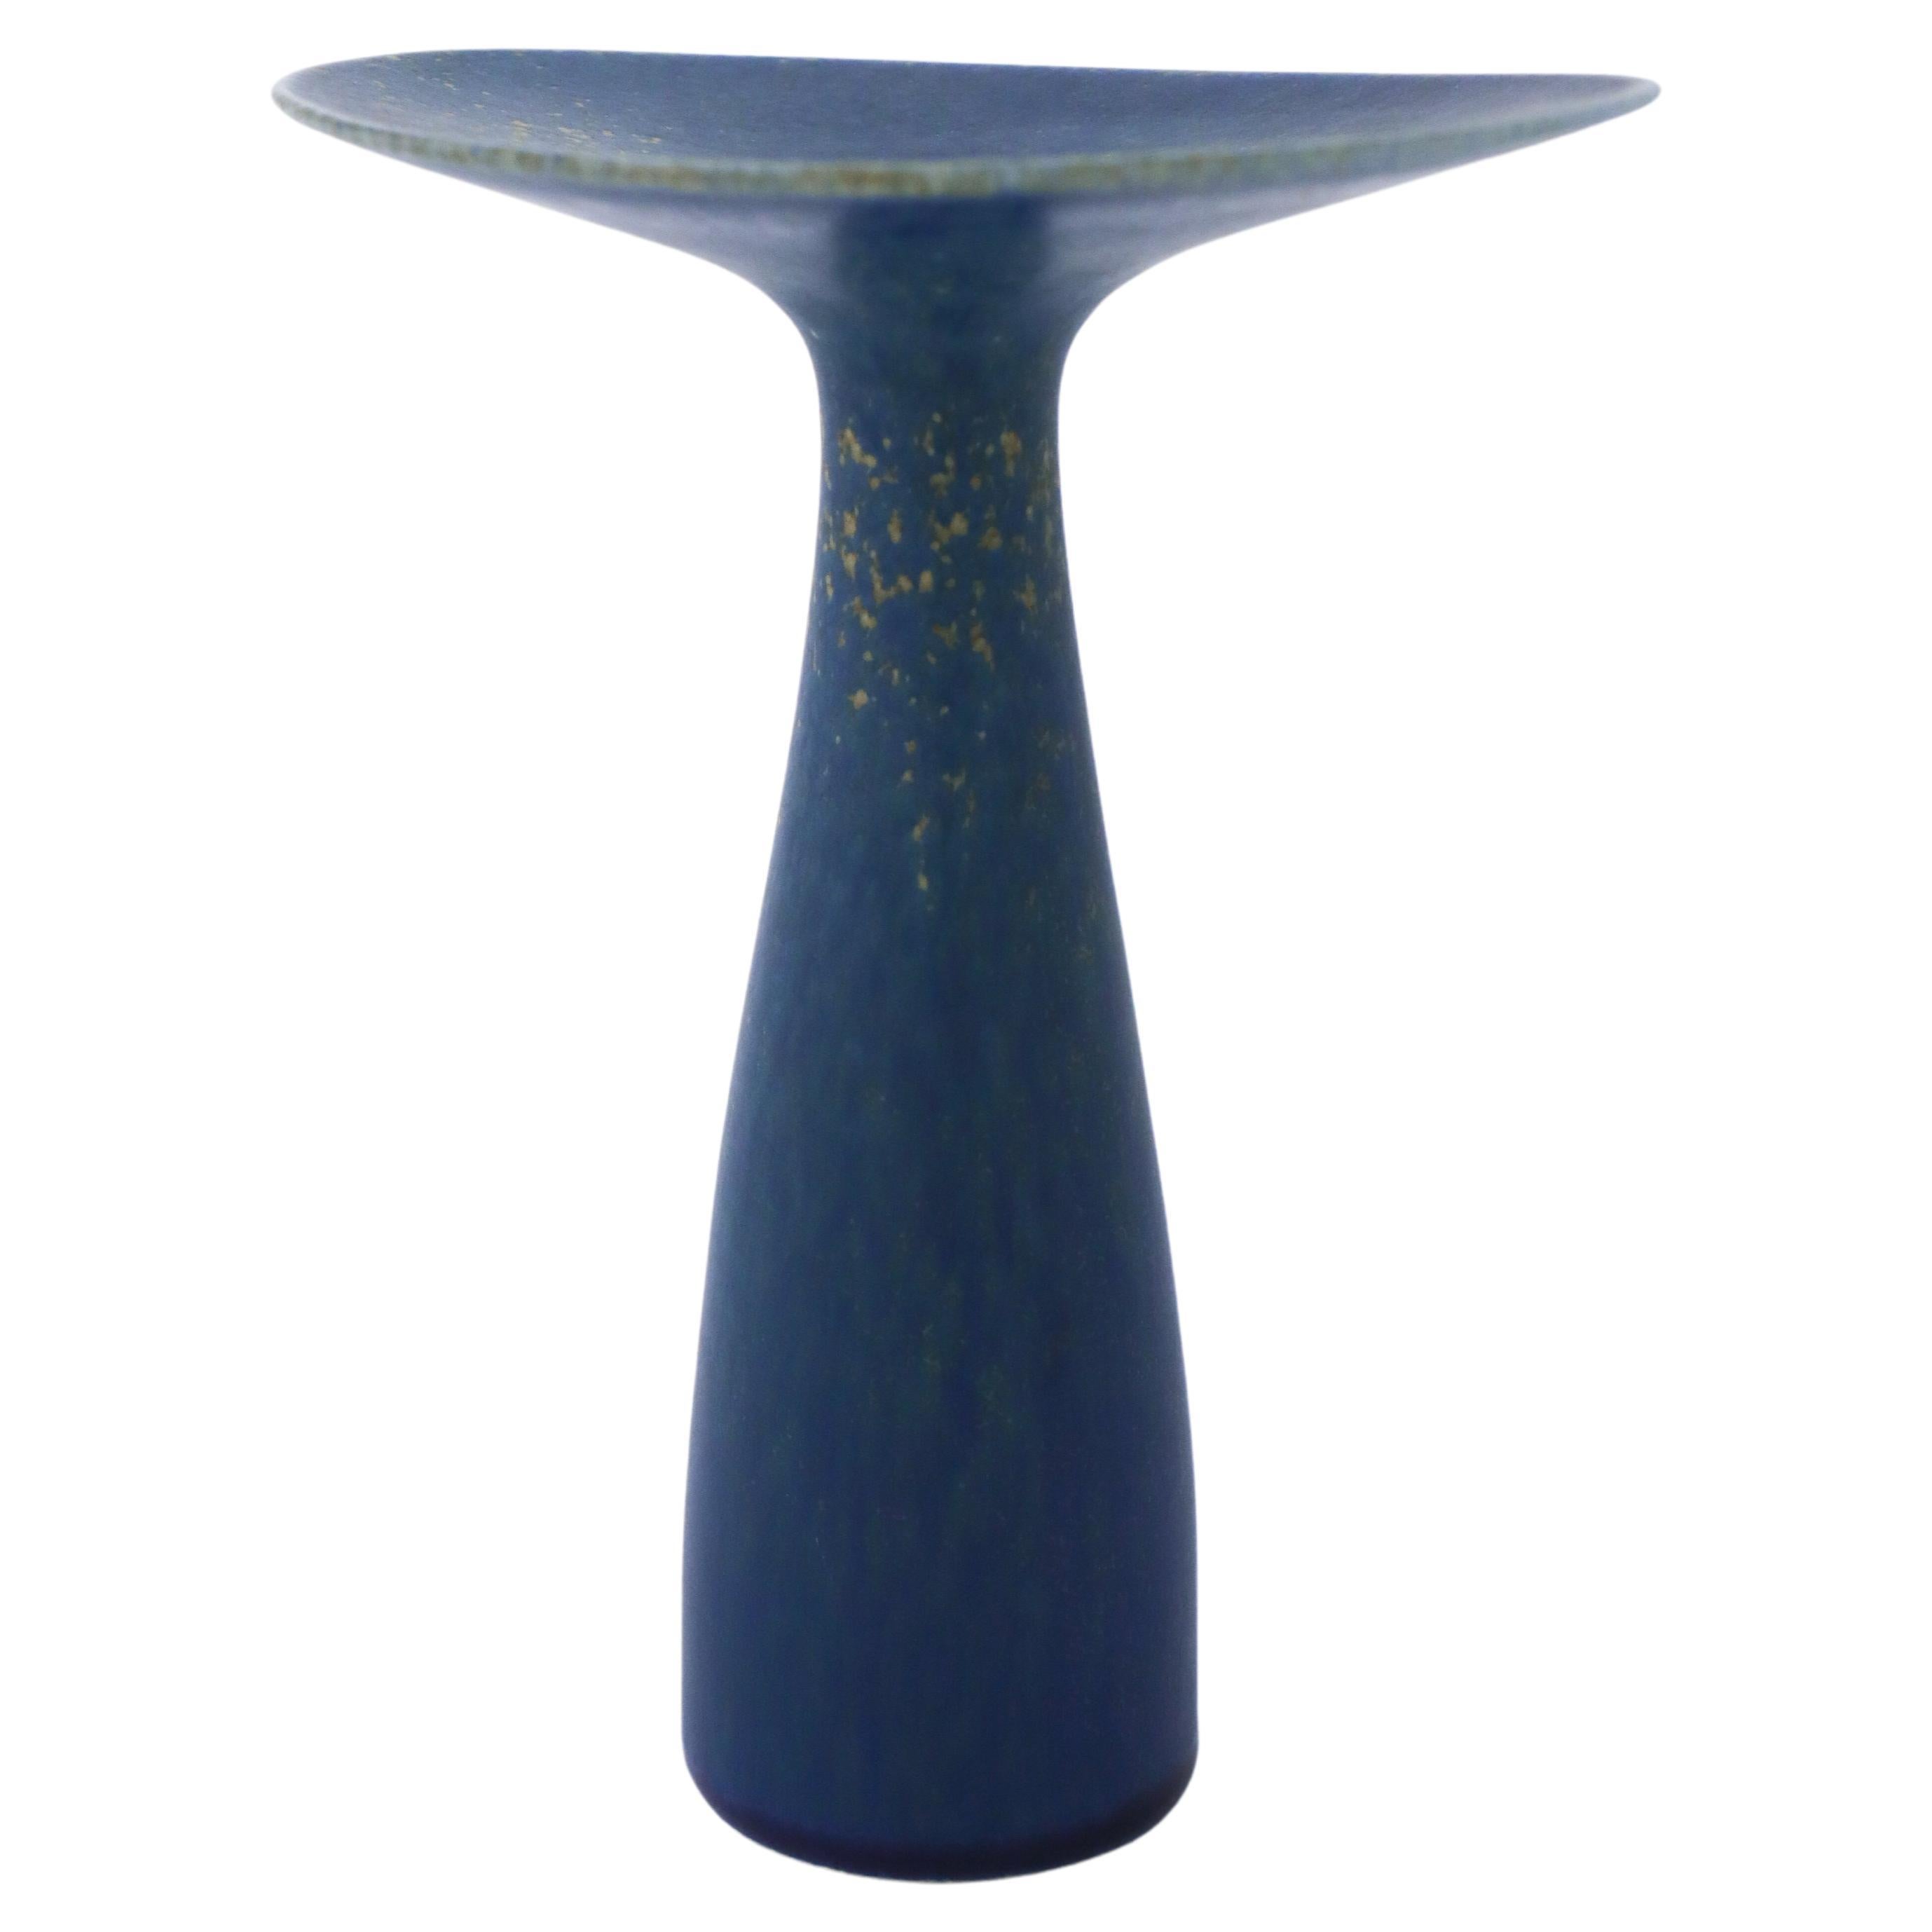 Stig Lindberg Blue Vase, Vitrin, Gustavsberg, Mid-20th Century Design For Sale